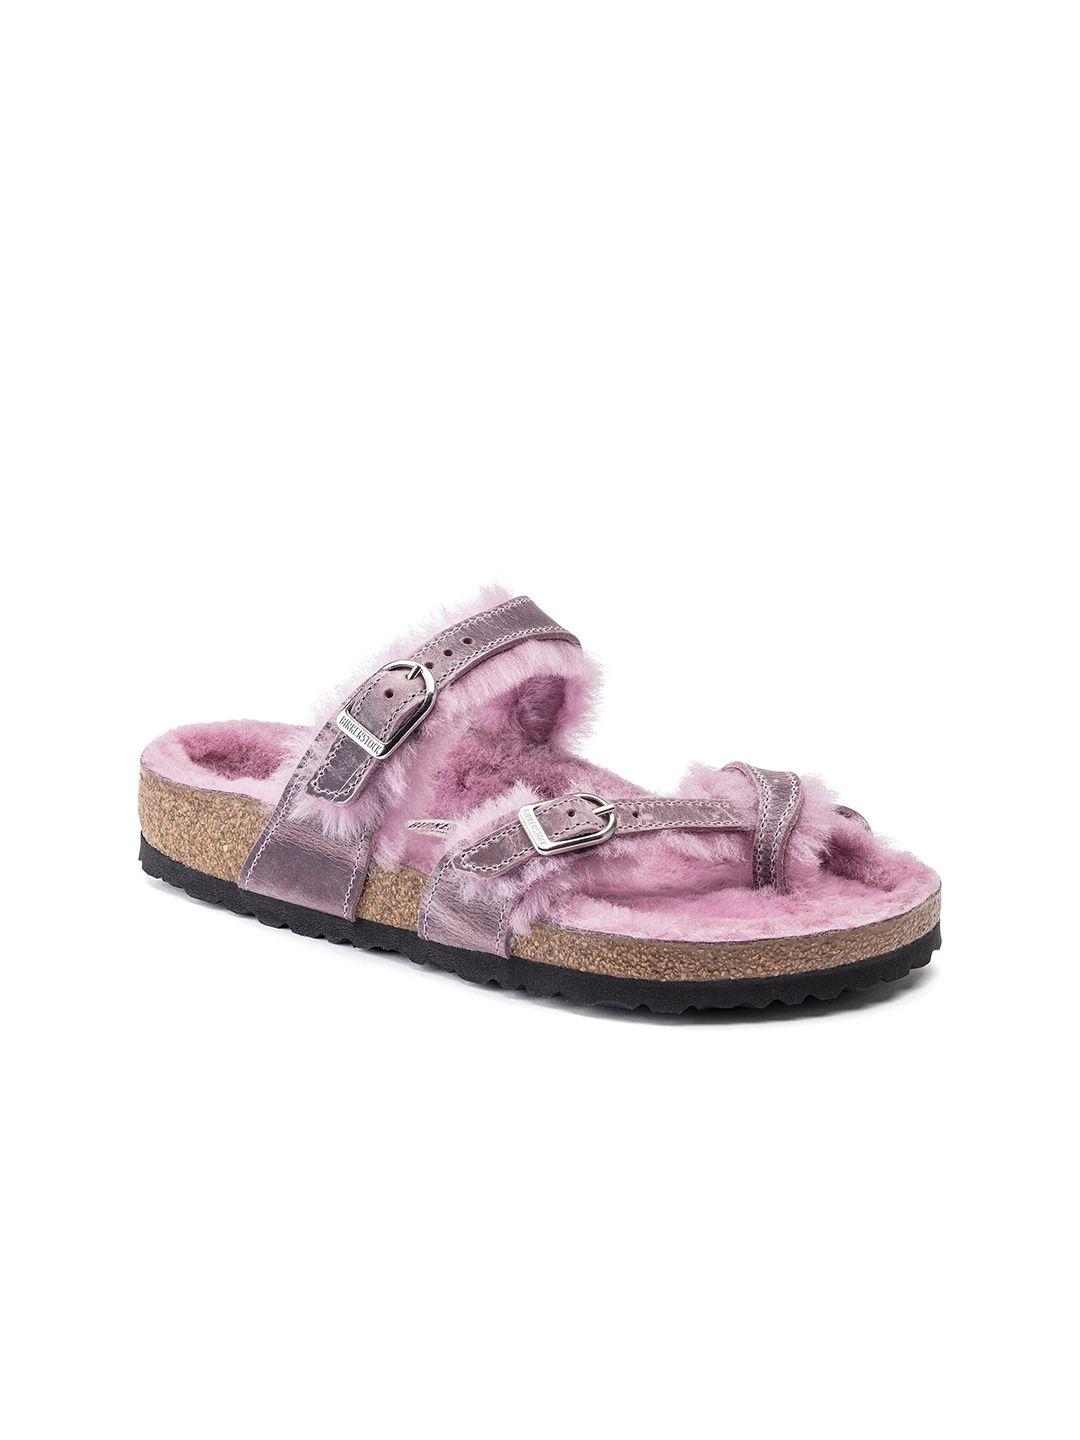 birkenstock women purple regular width mayari open toe flats with buckles